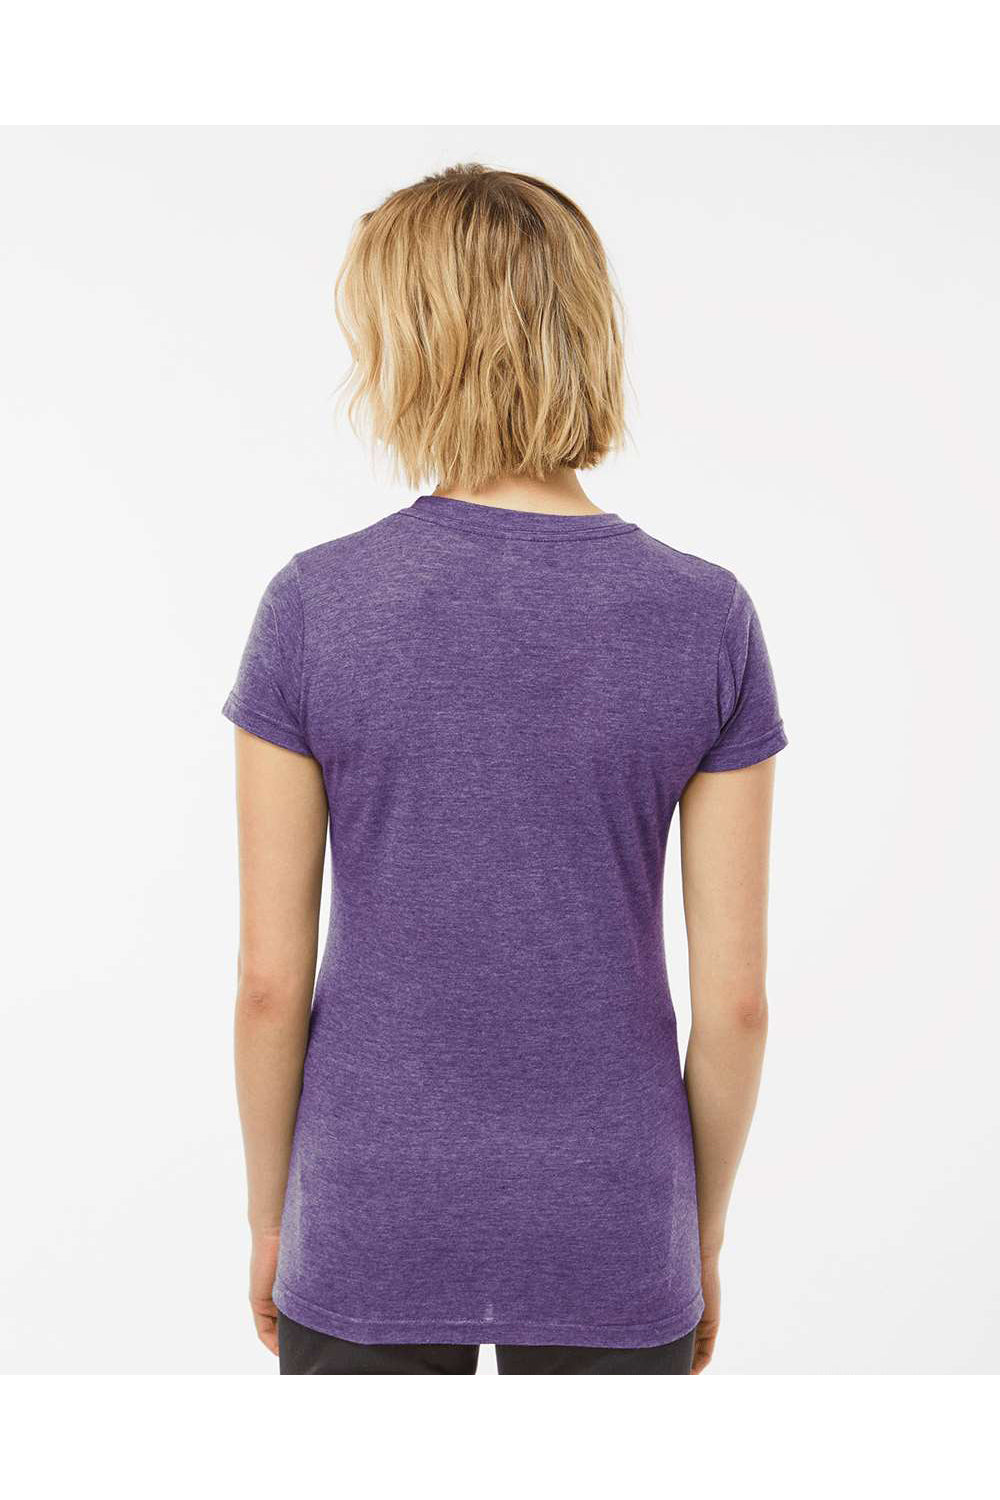 Tultex 240 Womens Poly-Rich Short Sleeve Crewneck T-Shirt Heather Purple Model Back